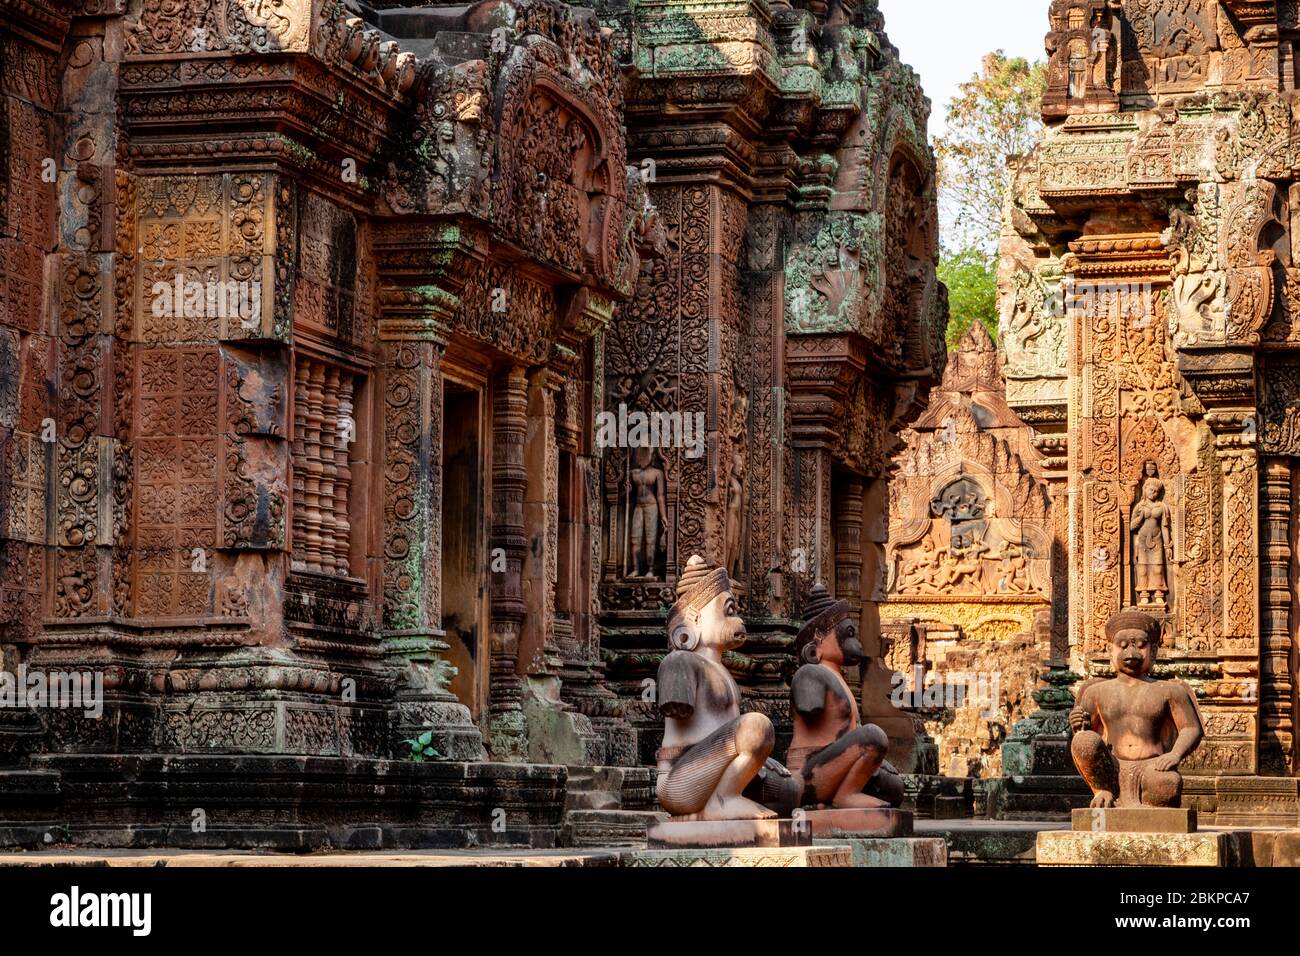 Banteay Srey Temple, Angkor Wat Temple Complex, Siem Reap, Cambodia. Stock Photo